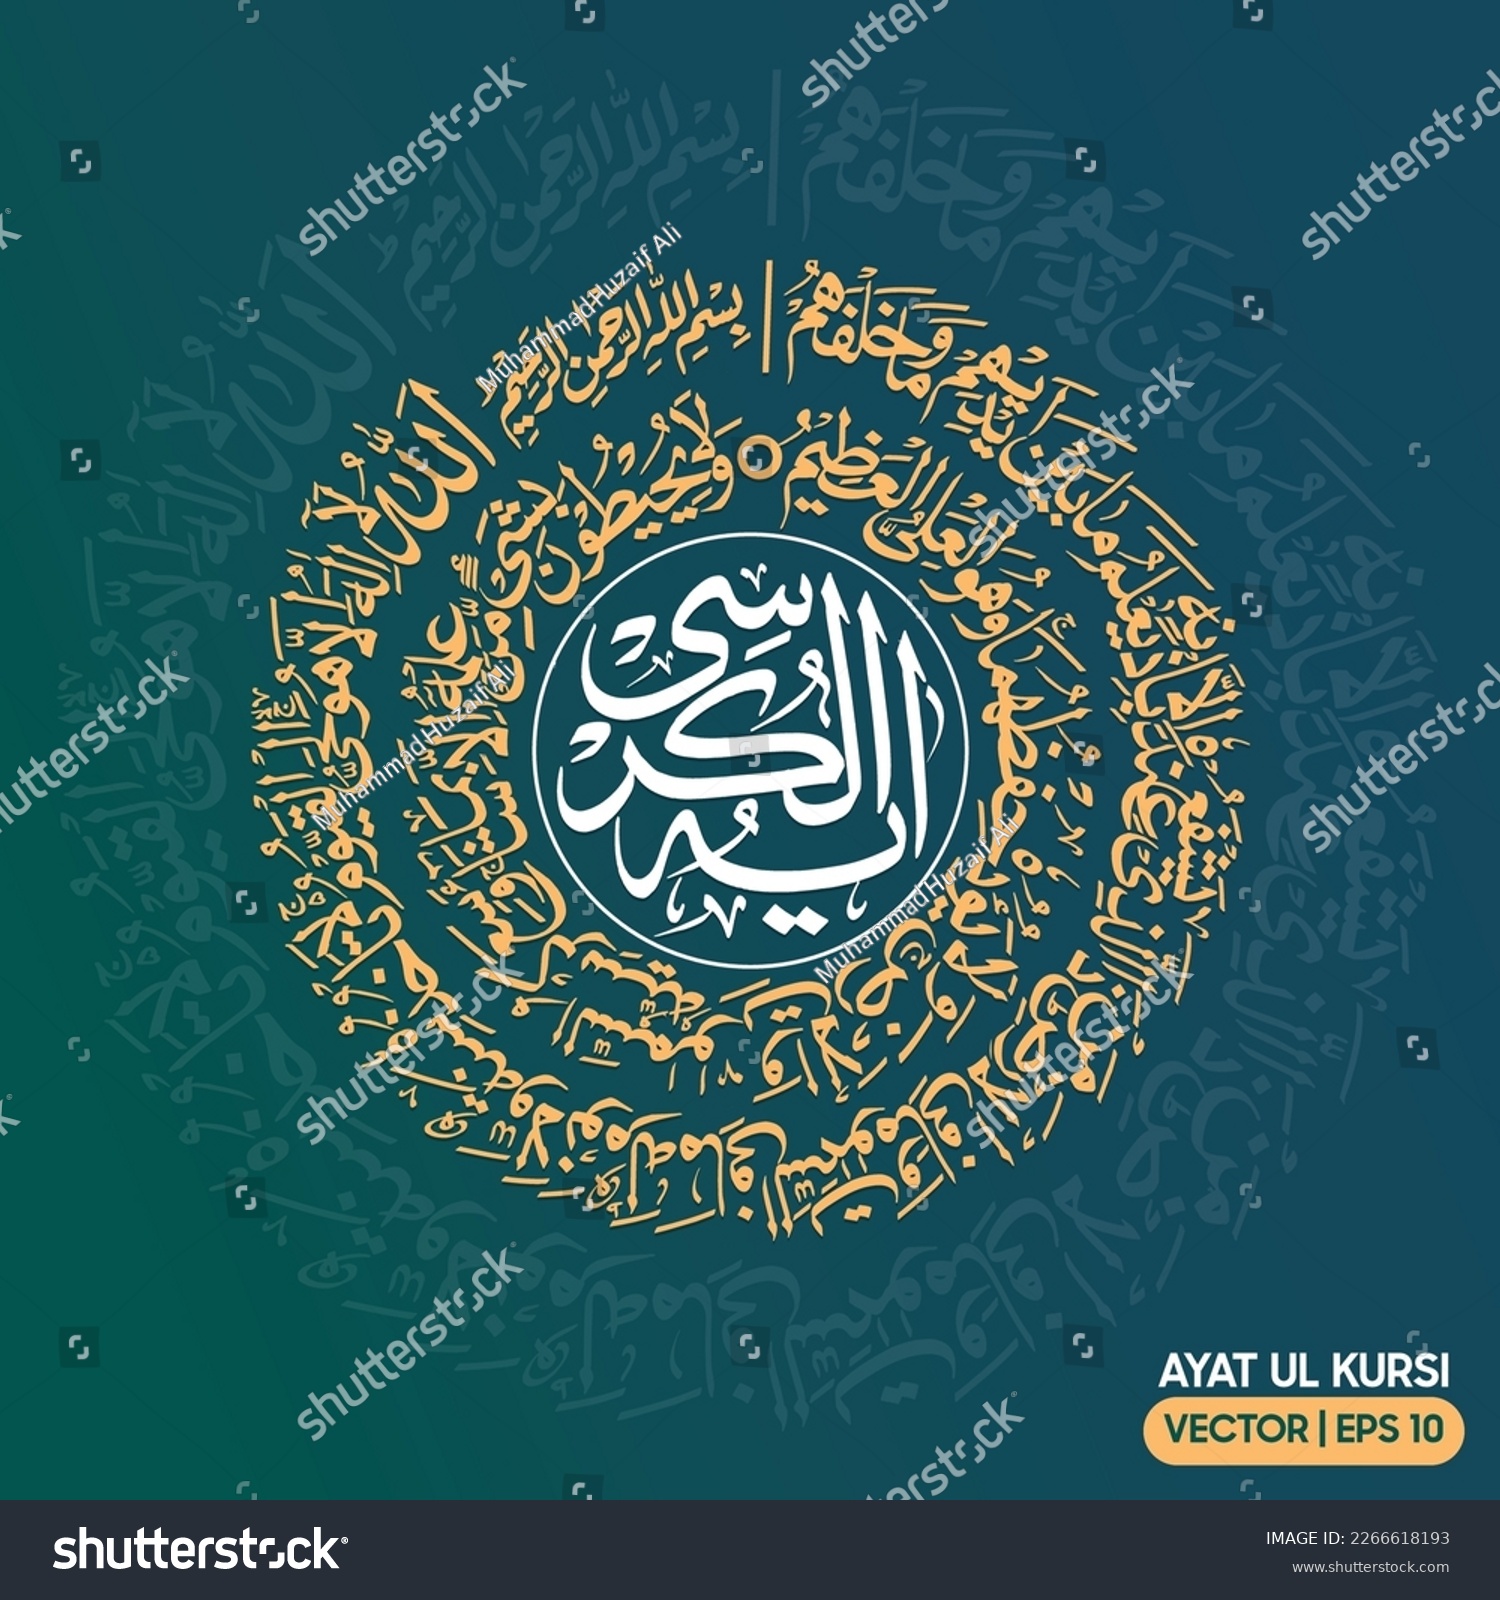 SVG of Vector Arabic calligraphy of Surah Al-Baqarah (verse number 255) - AYAT UL KURSI. svg